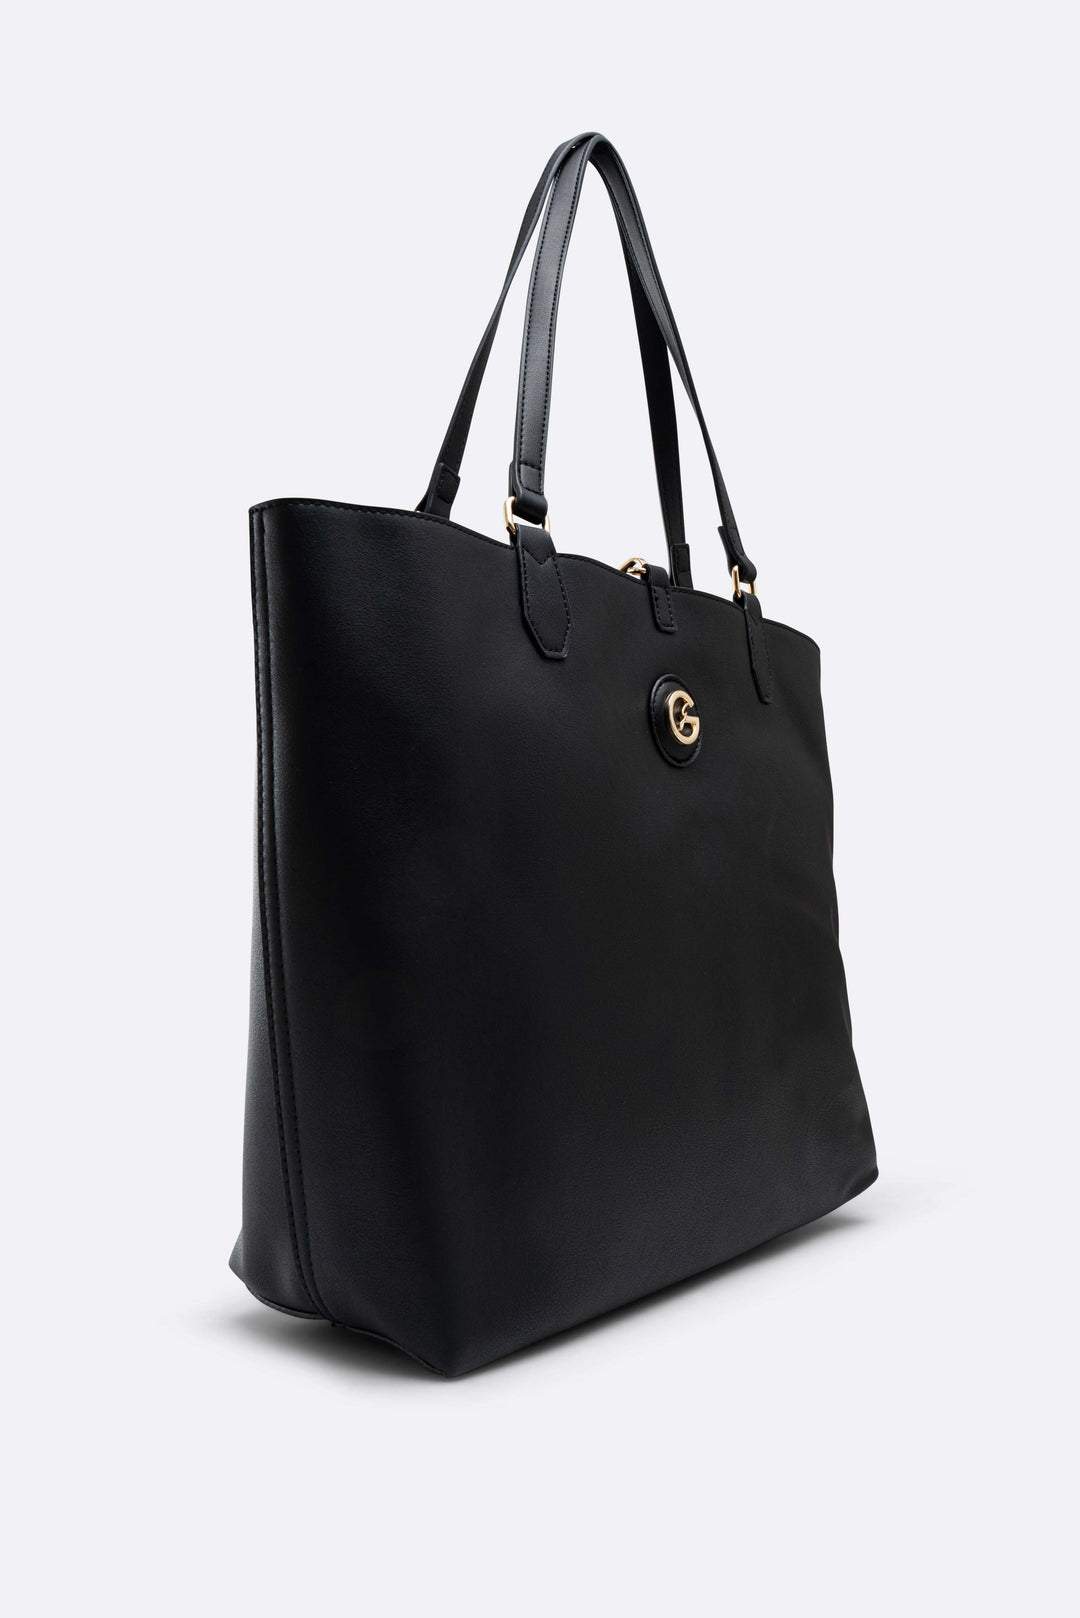 Shopping bag large reversible Teodosia black con tracolla